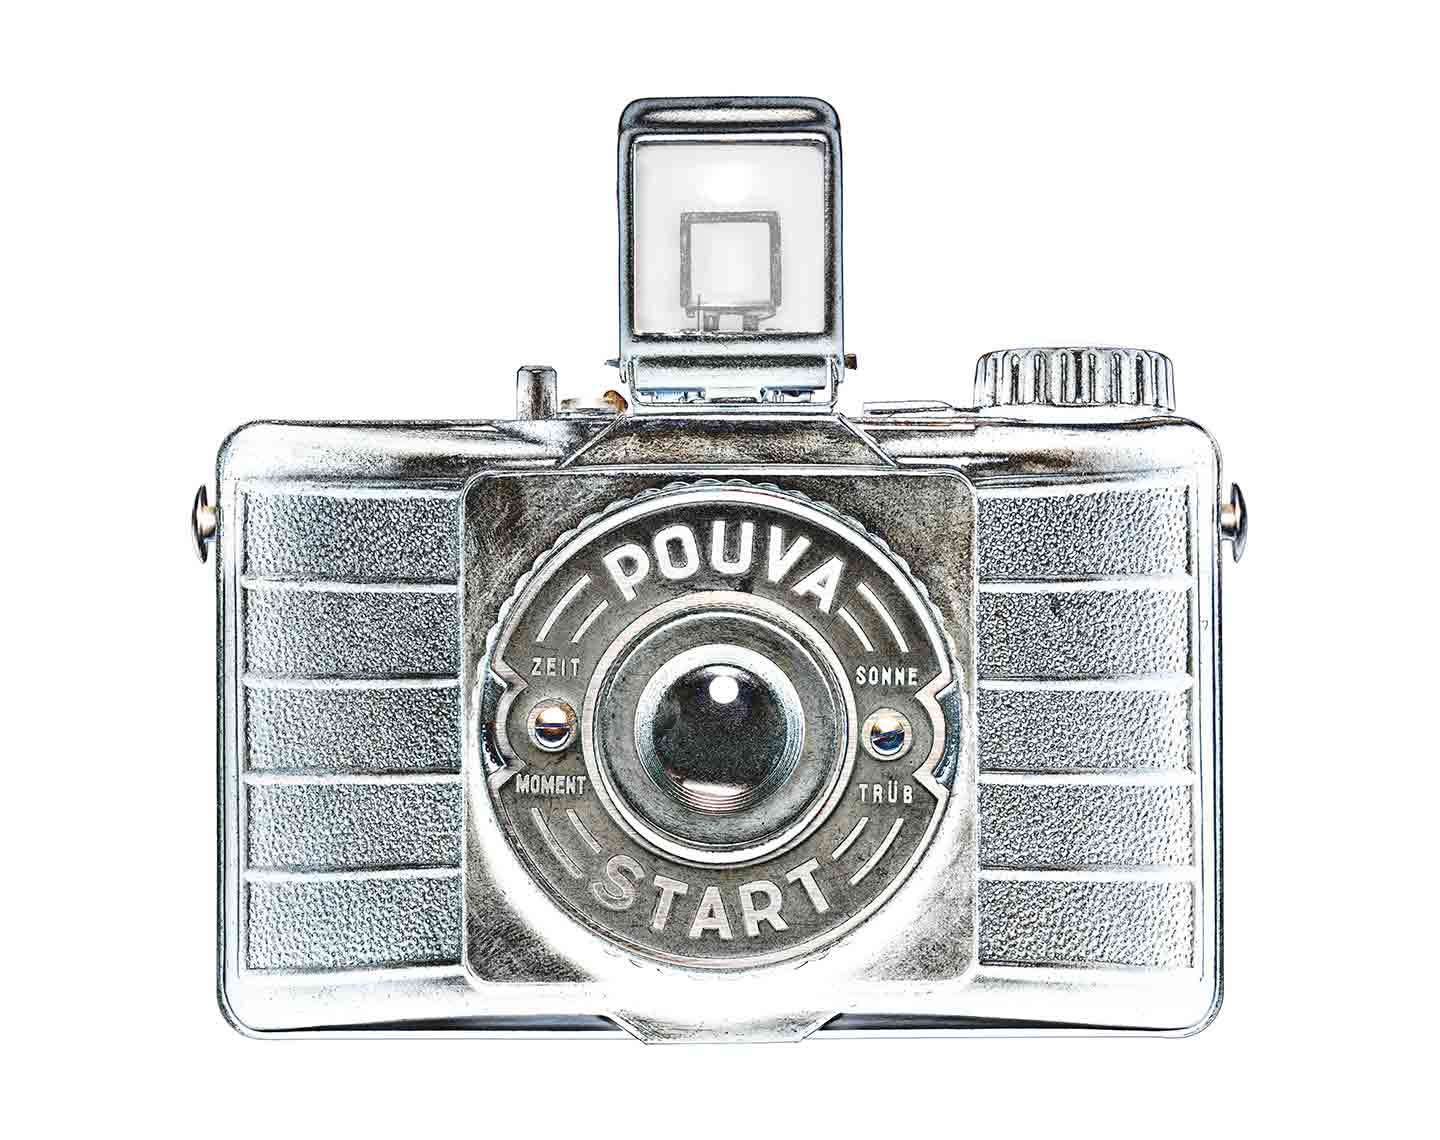 Pouva Camera Negative  — Still Life and Product Photography